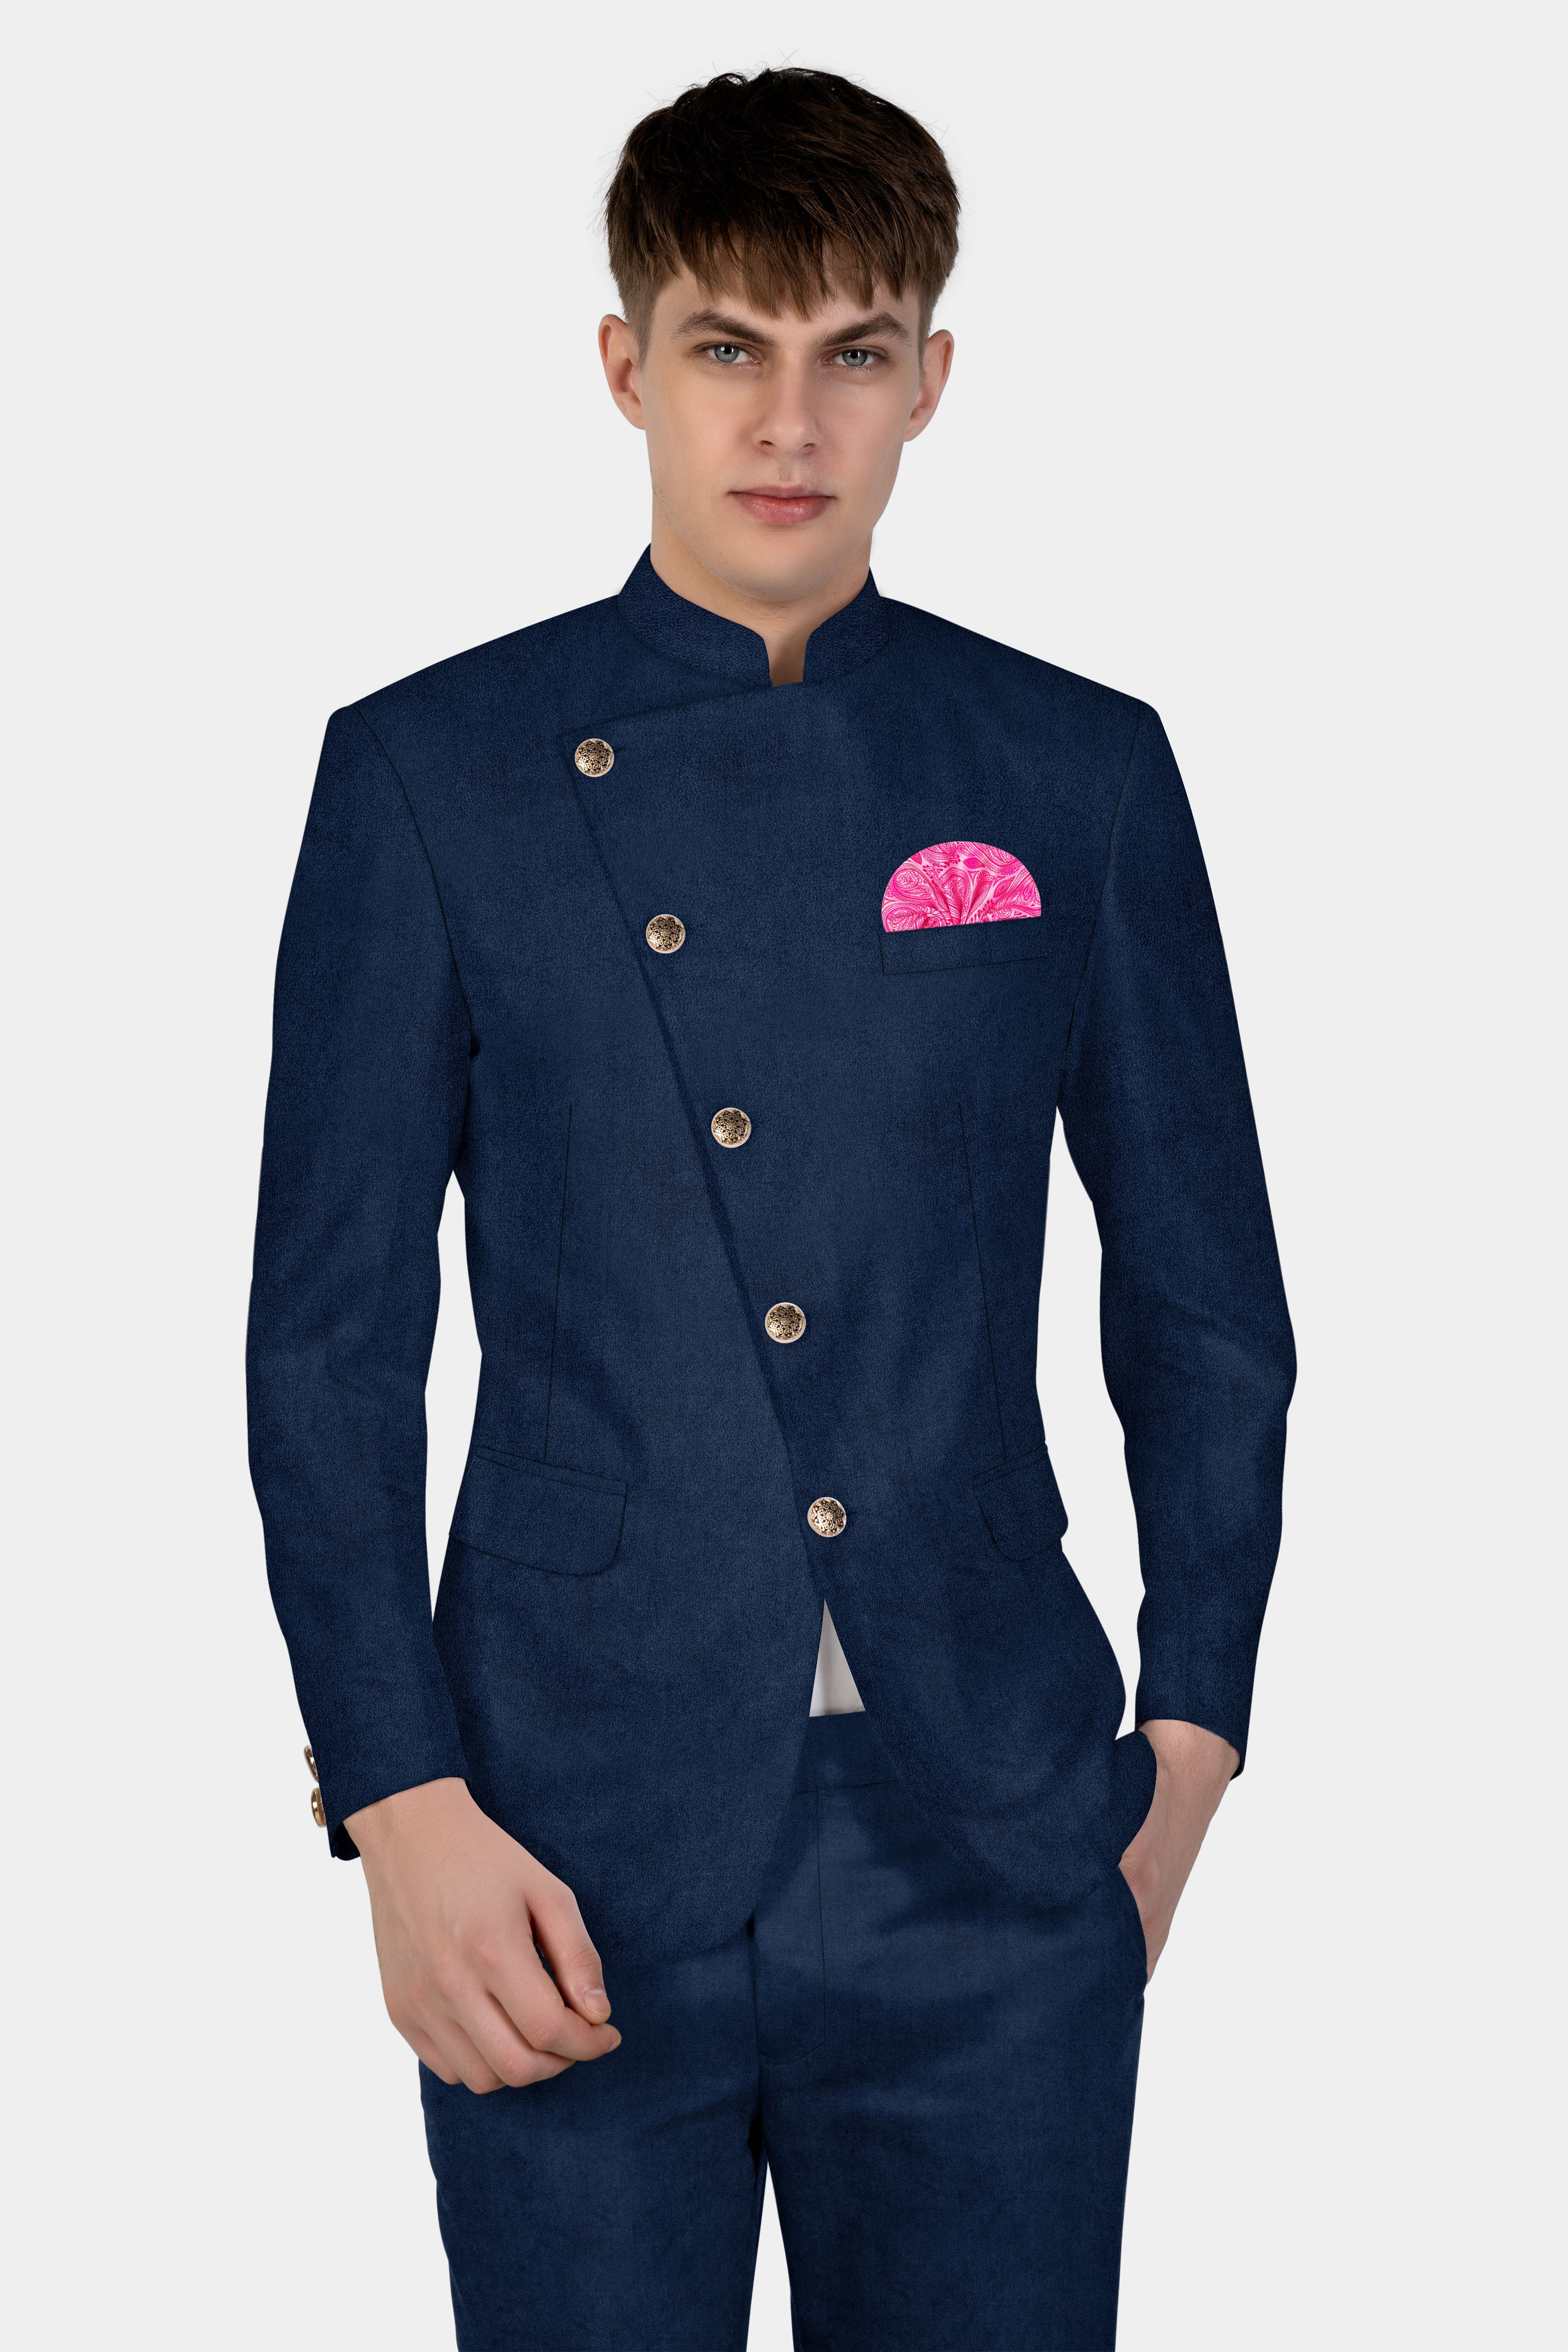 Downriver Blue Velvet Cross Placket Bandhgala Suit